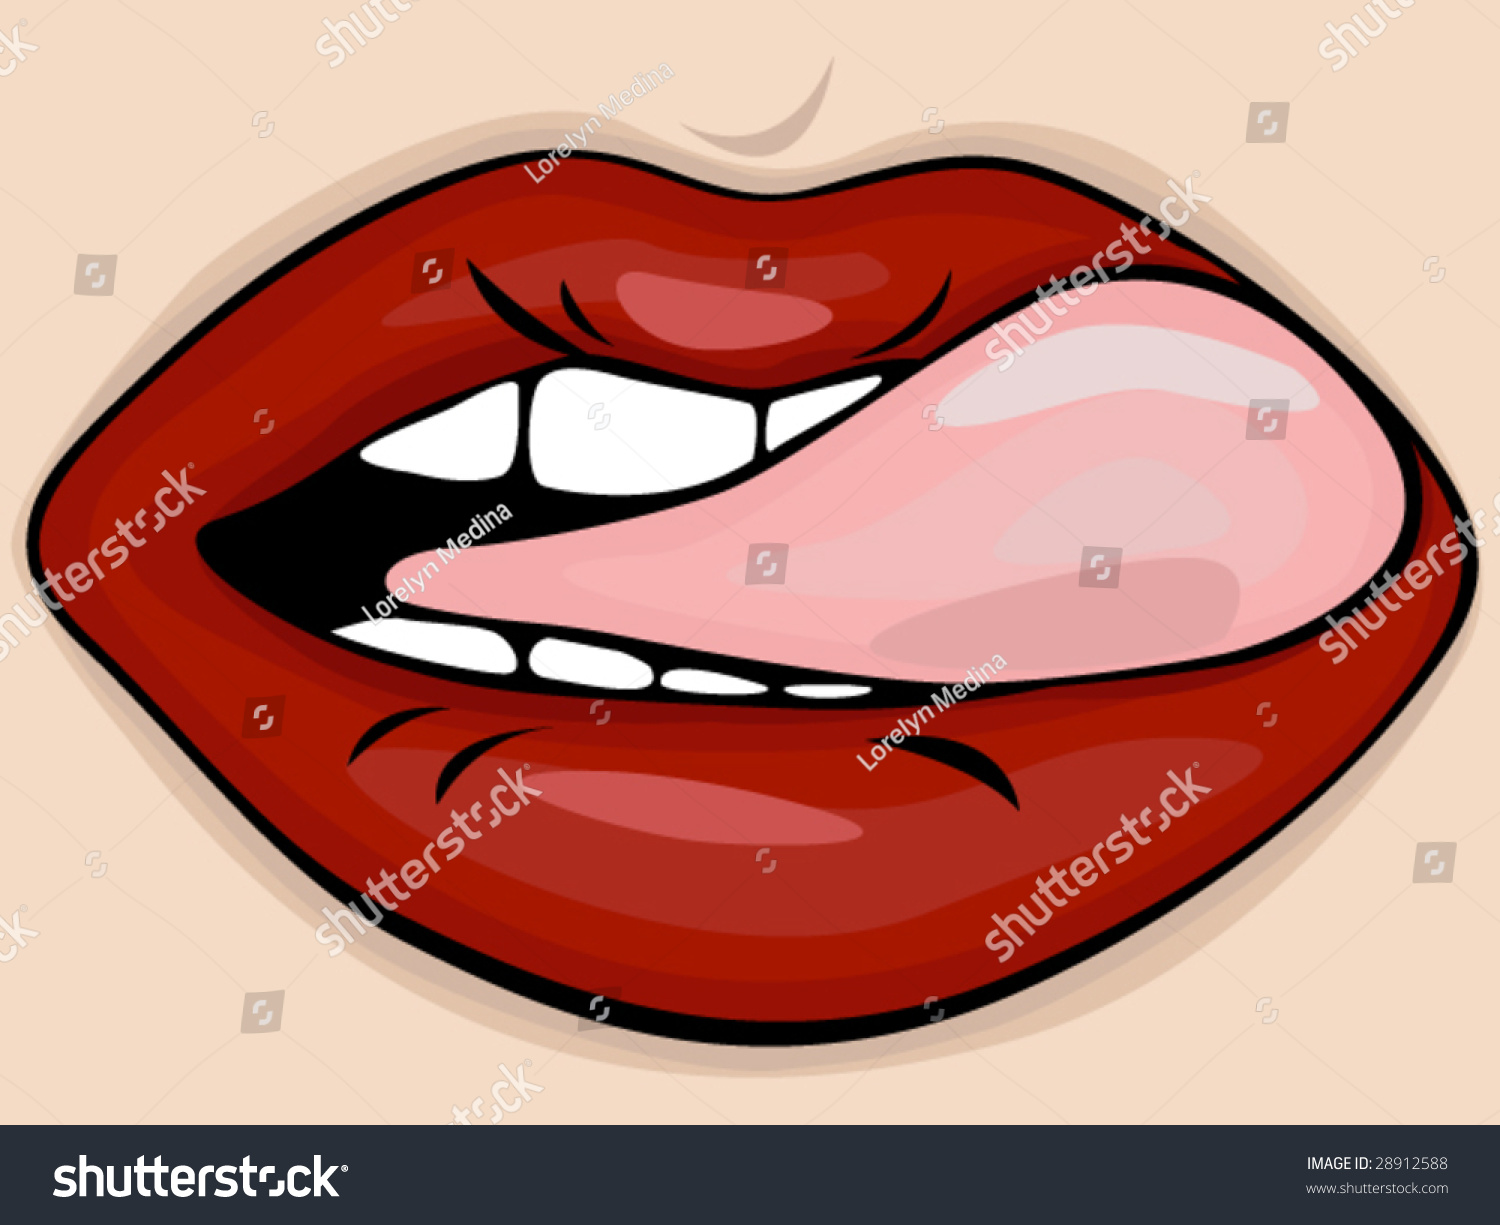 Woman'S Lips - Vector - 28912588 : Shutterstock